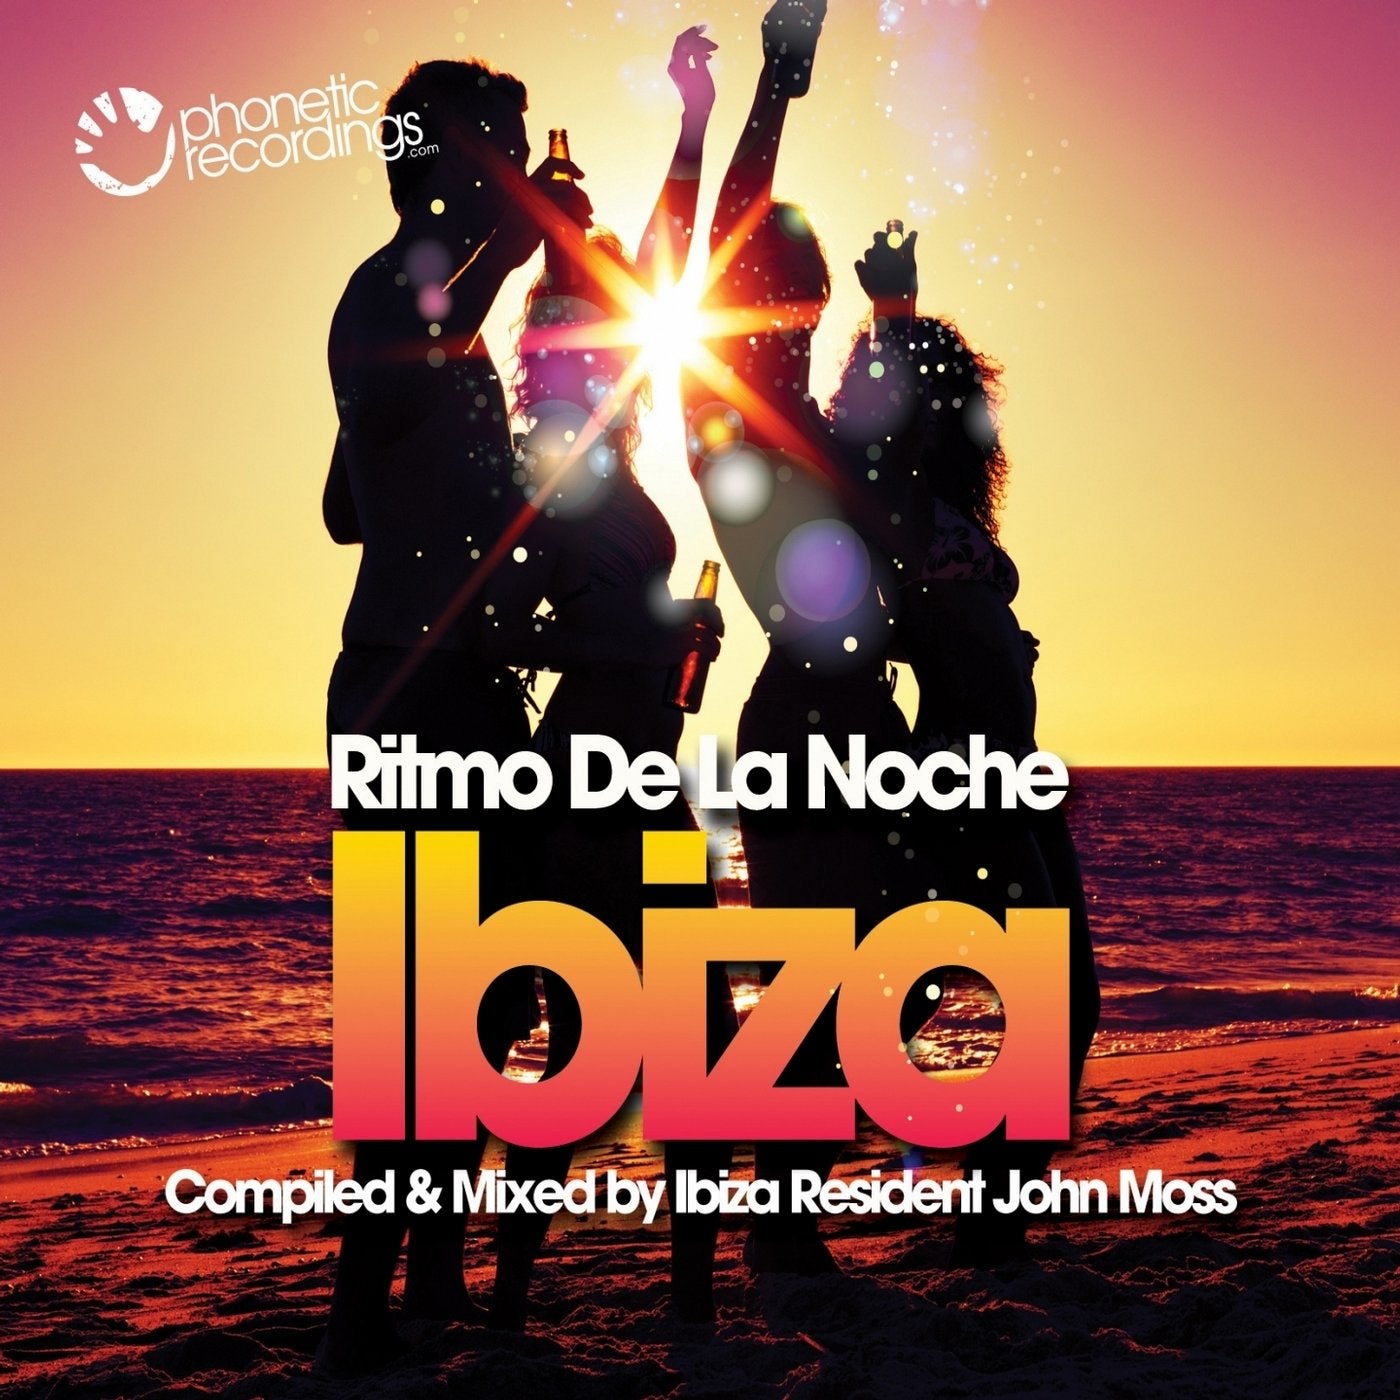 Ritmo De La Noche - Ibiza